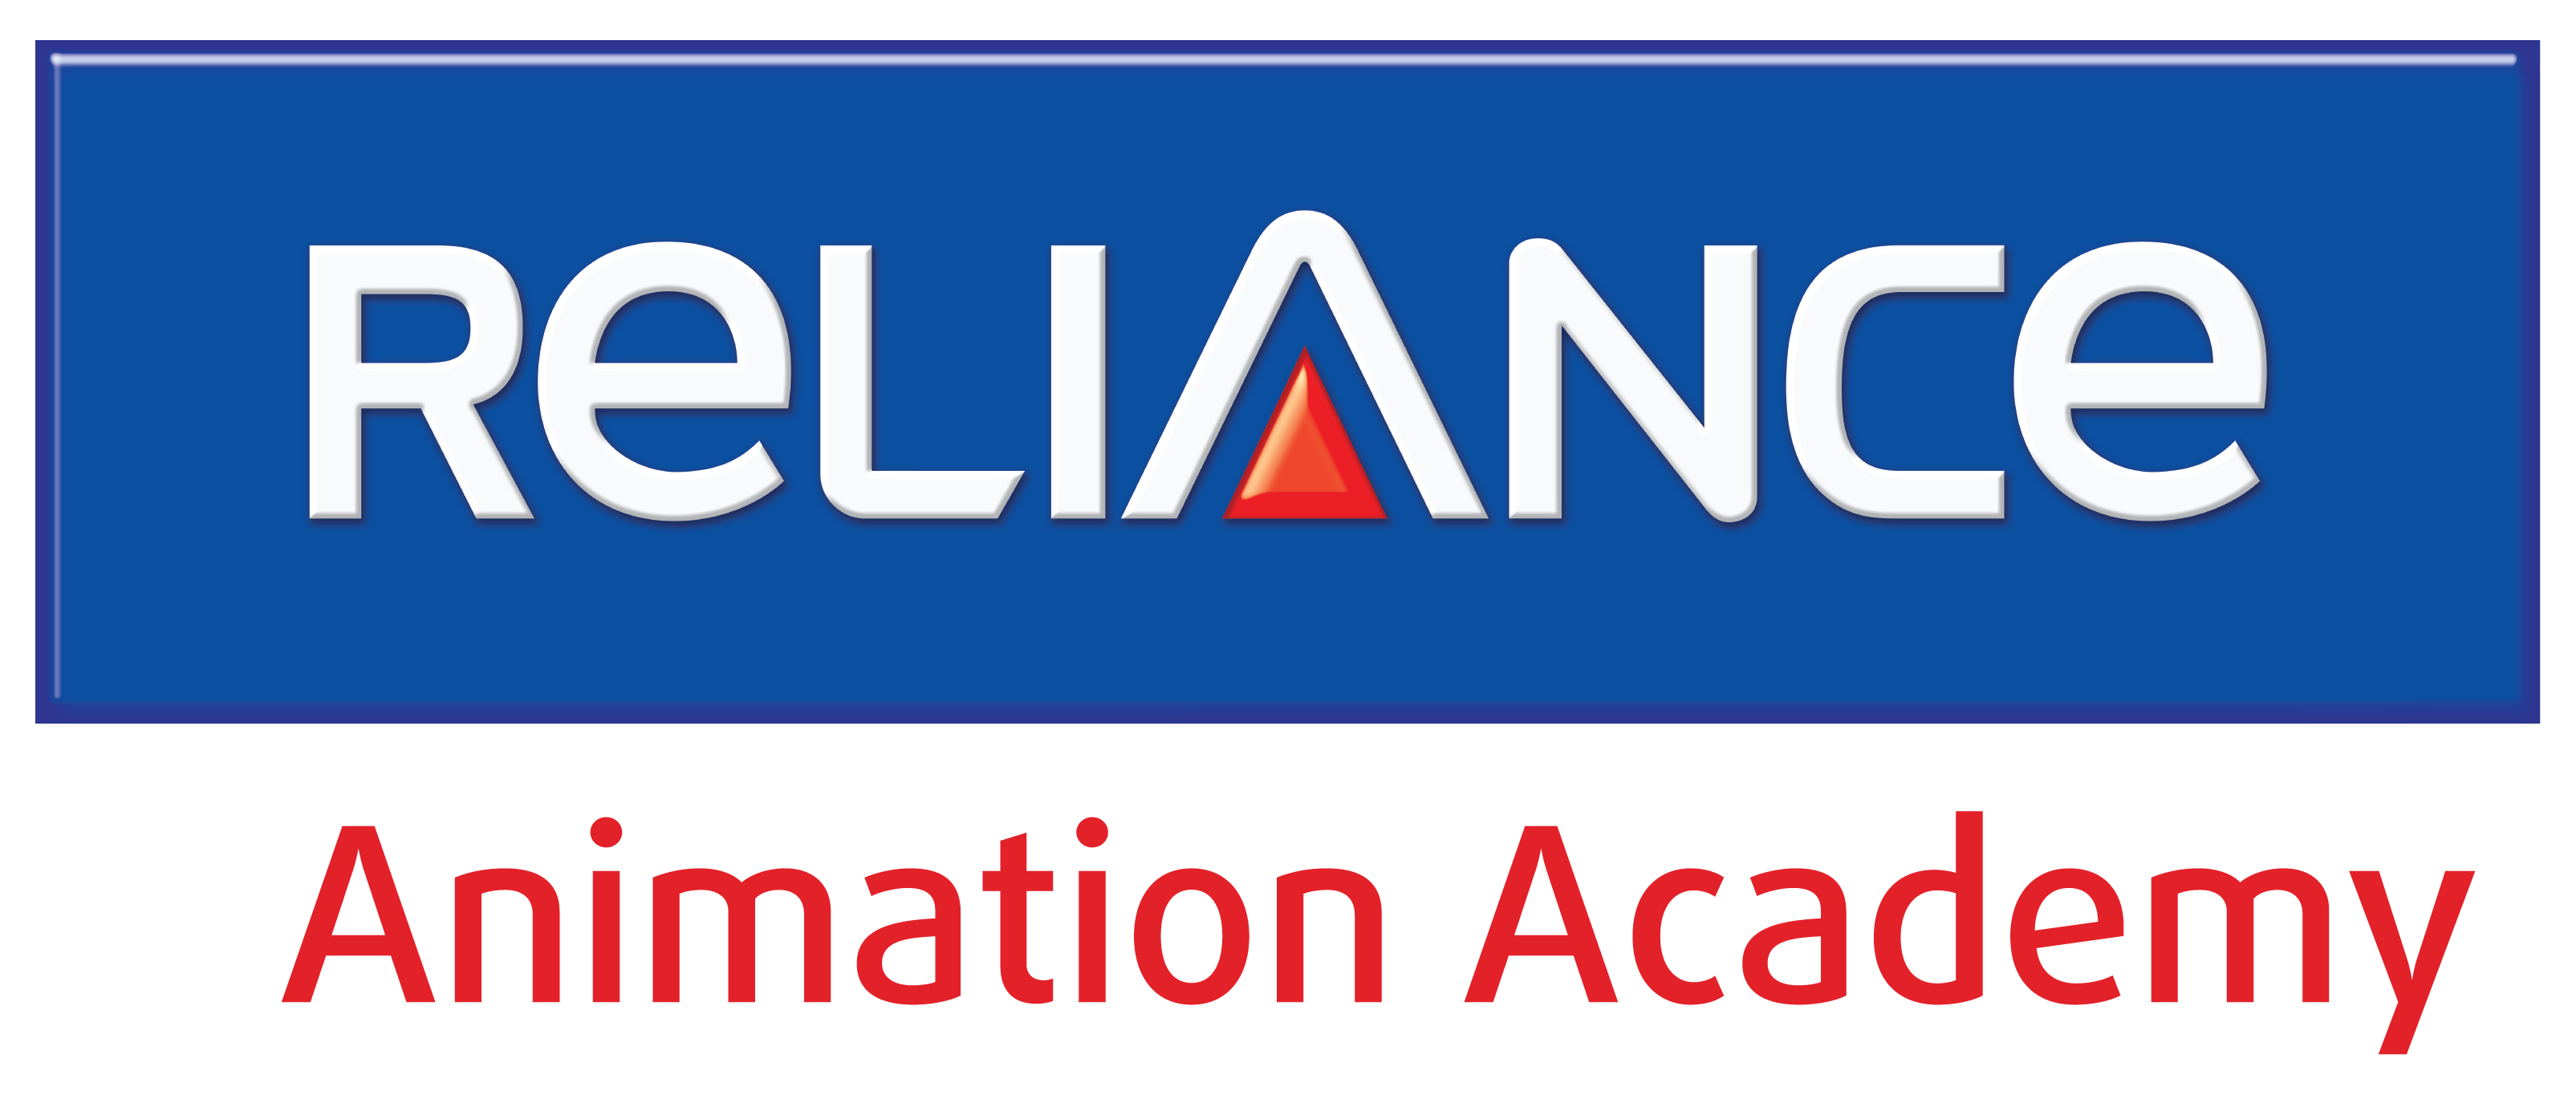 Reliance Animation Academy